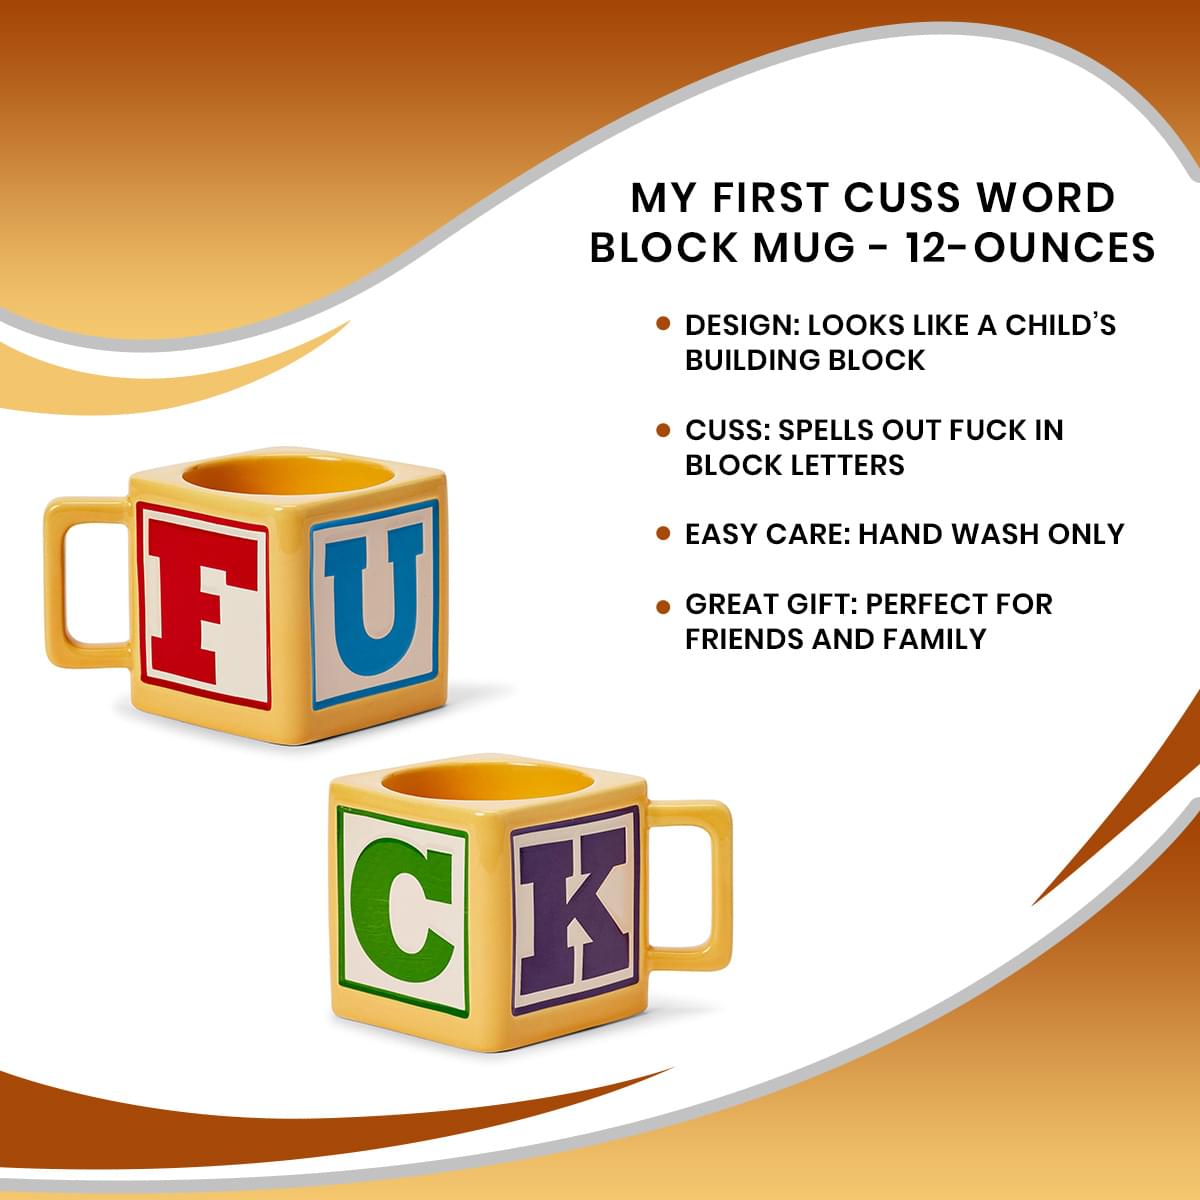 My First Cuss Word Block Mug - 12-Ounces